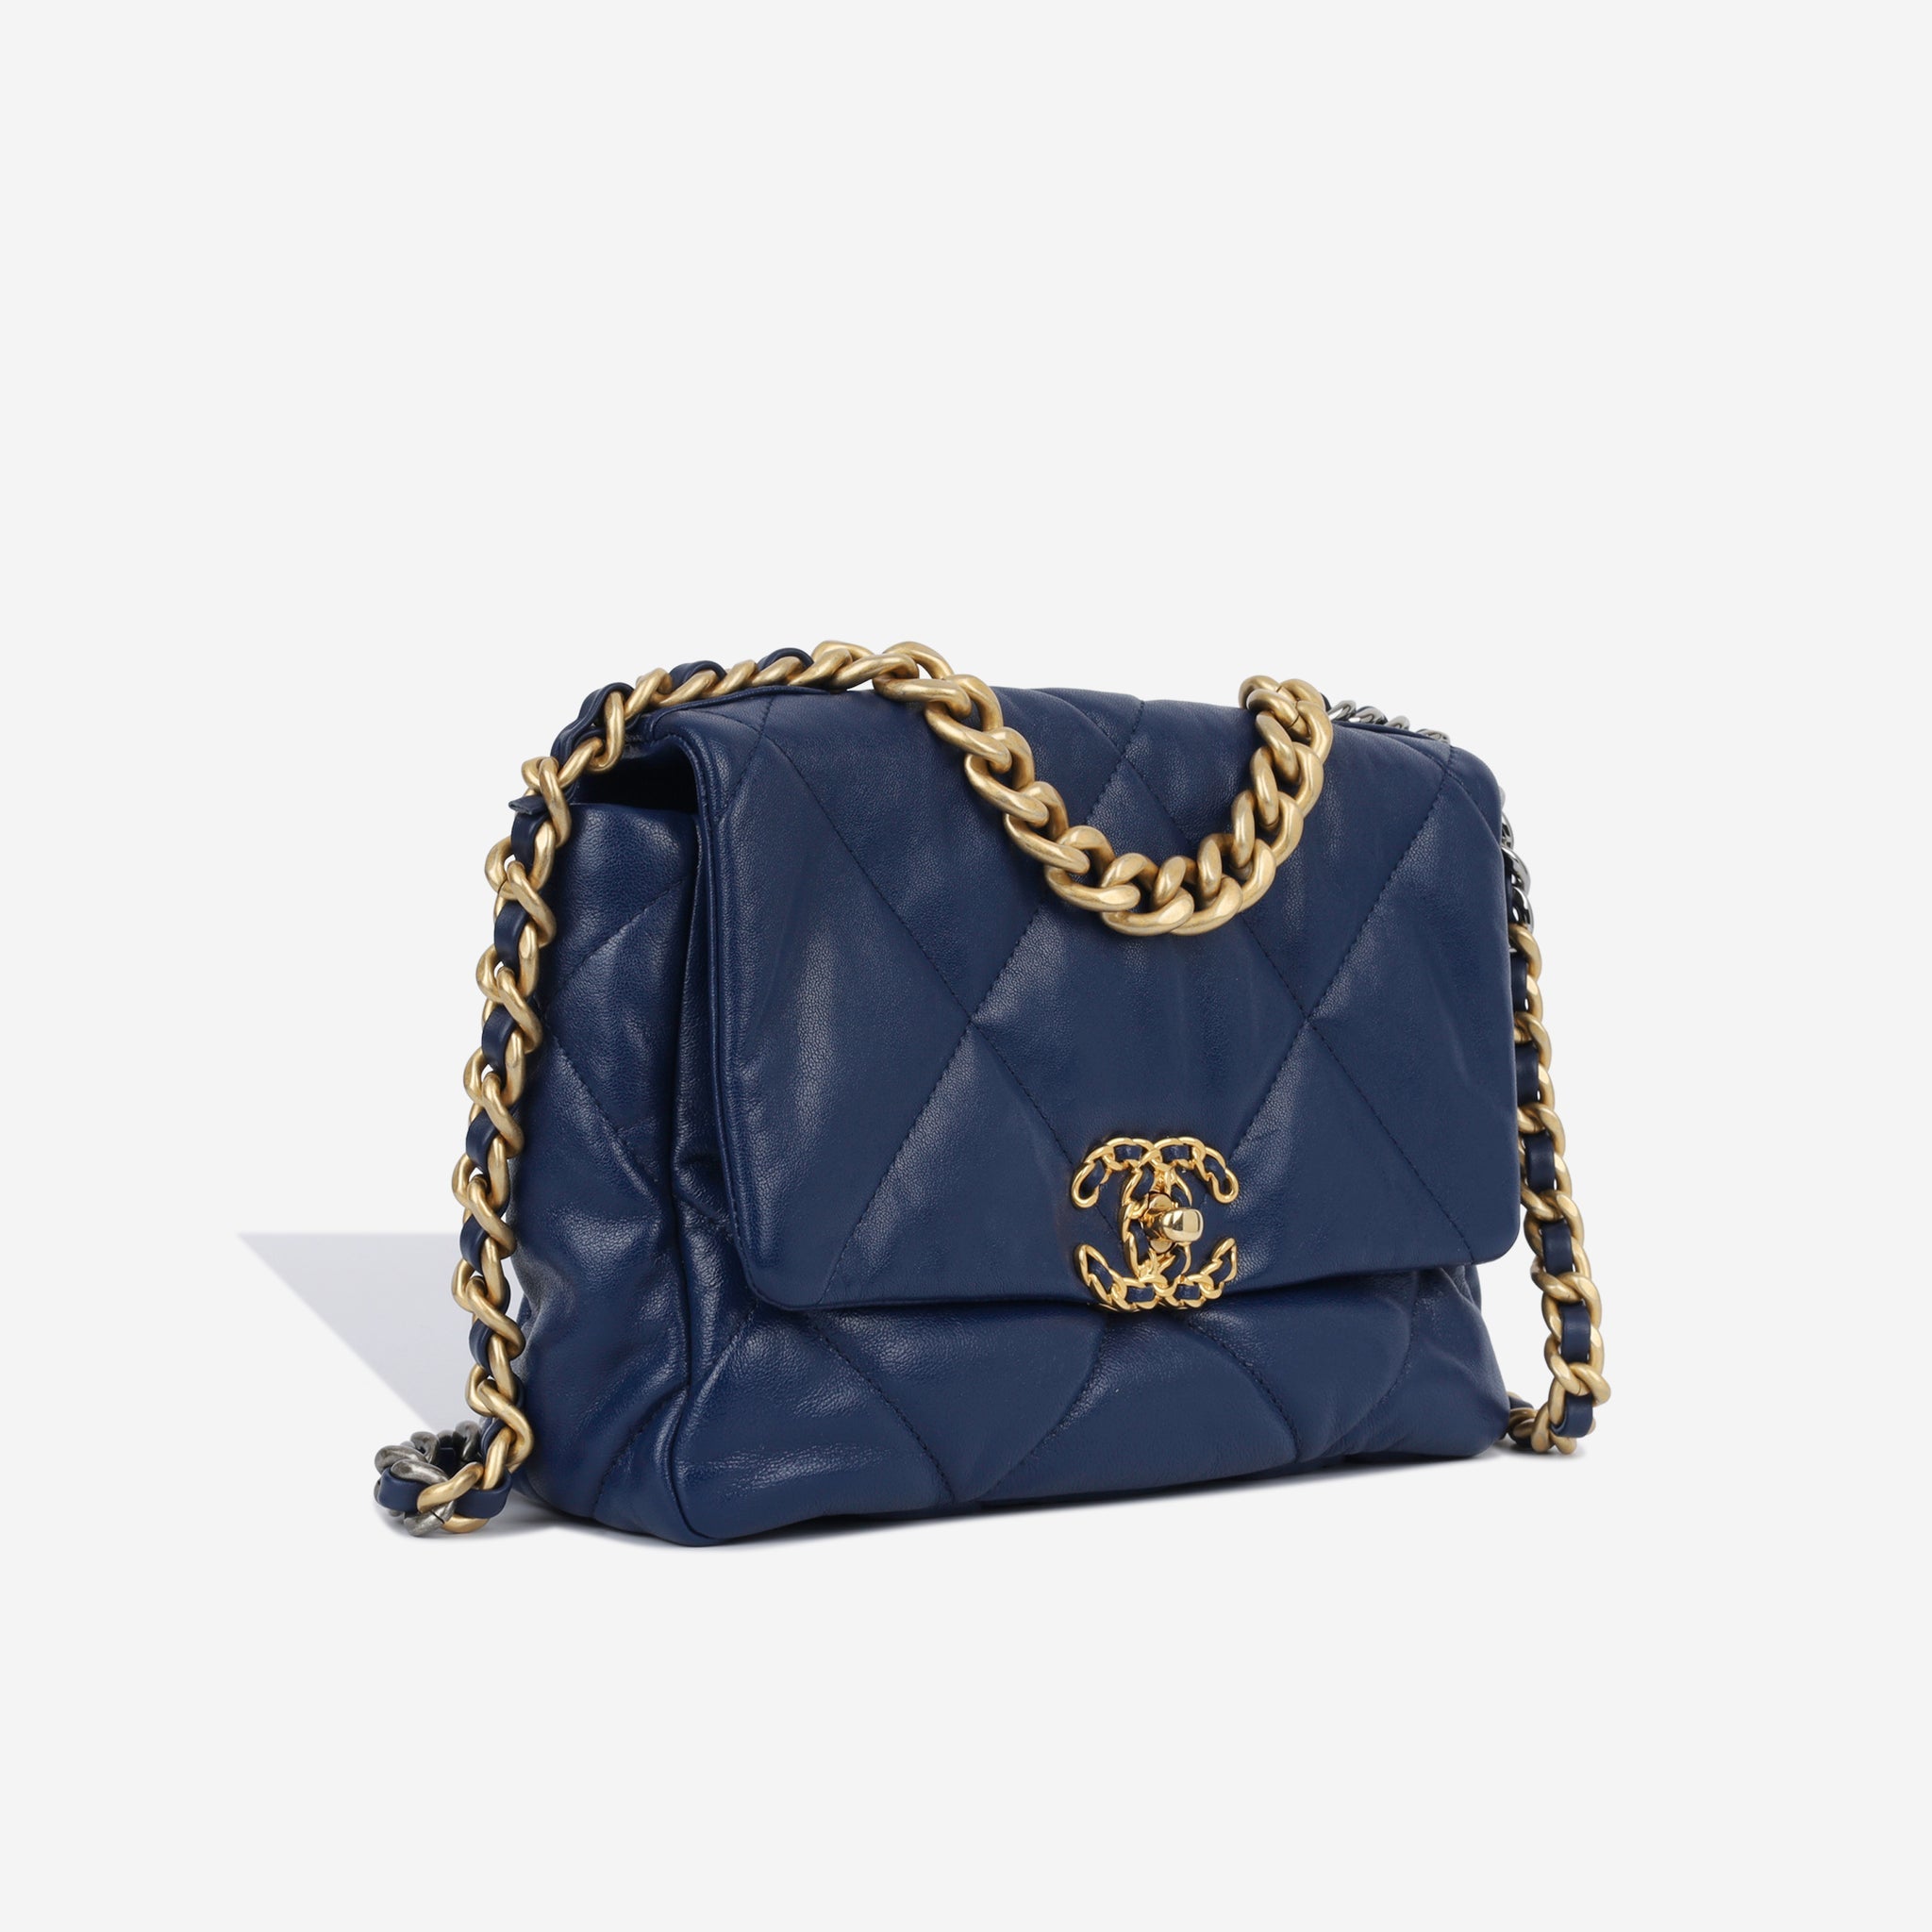 100% AUTHENTIC Chanel 19 Large Goatskin Blue handbag